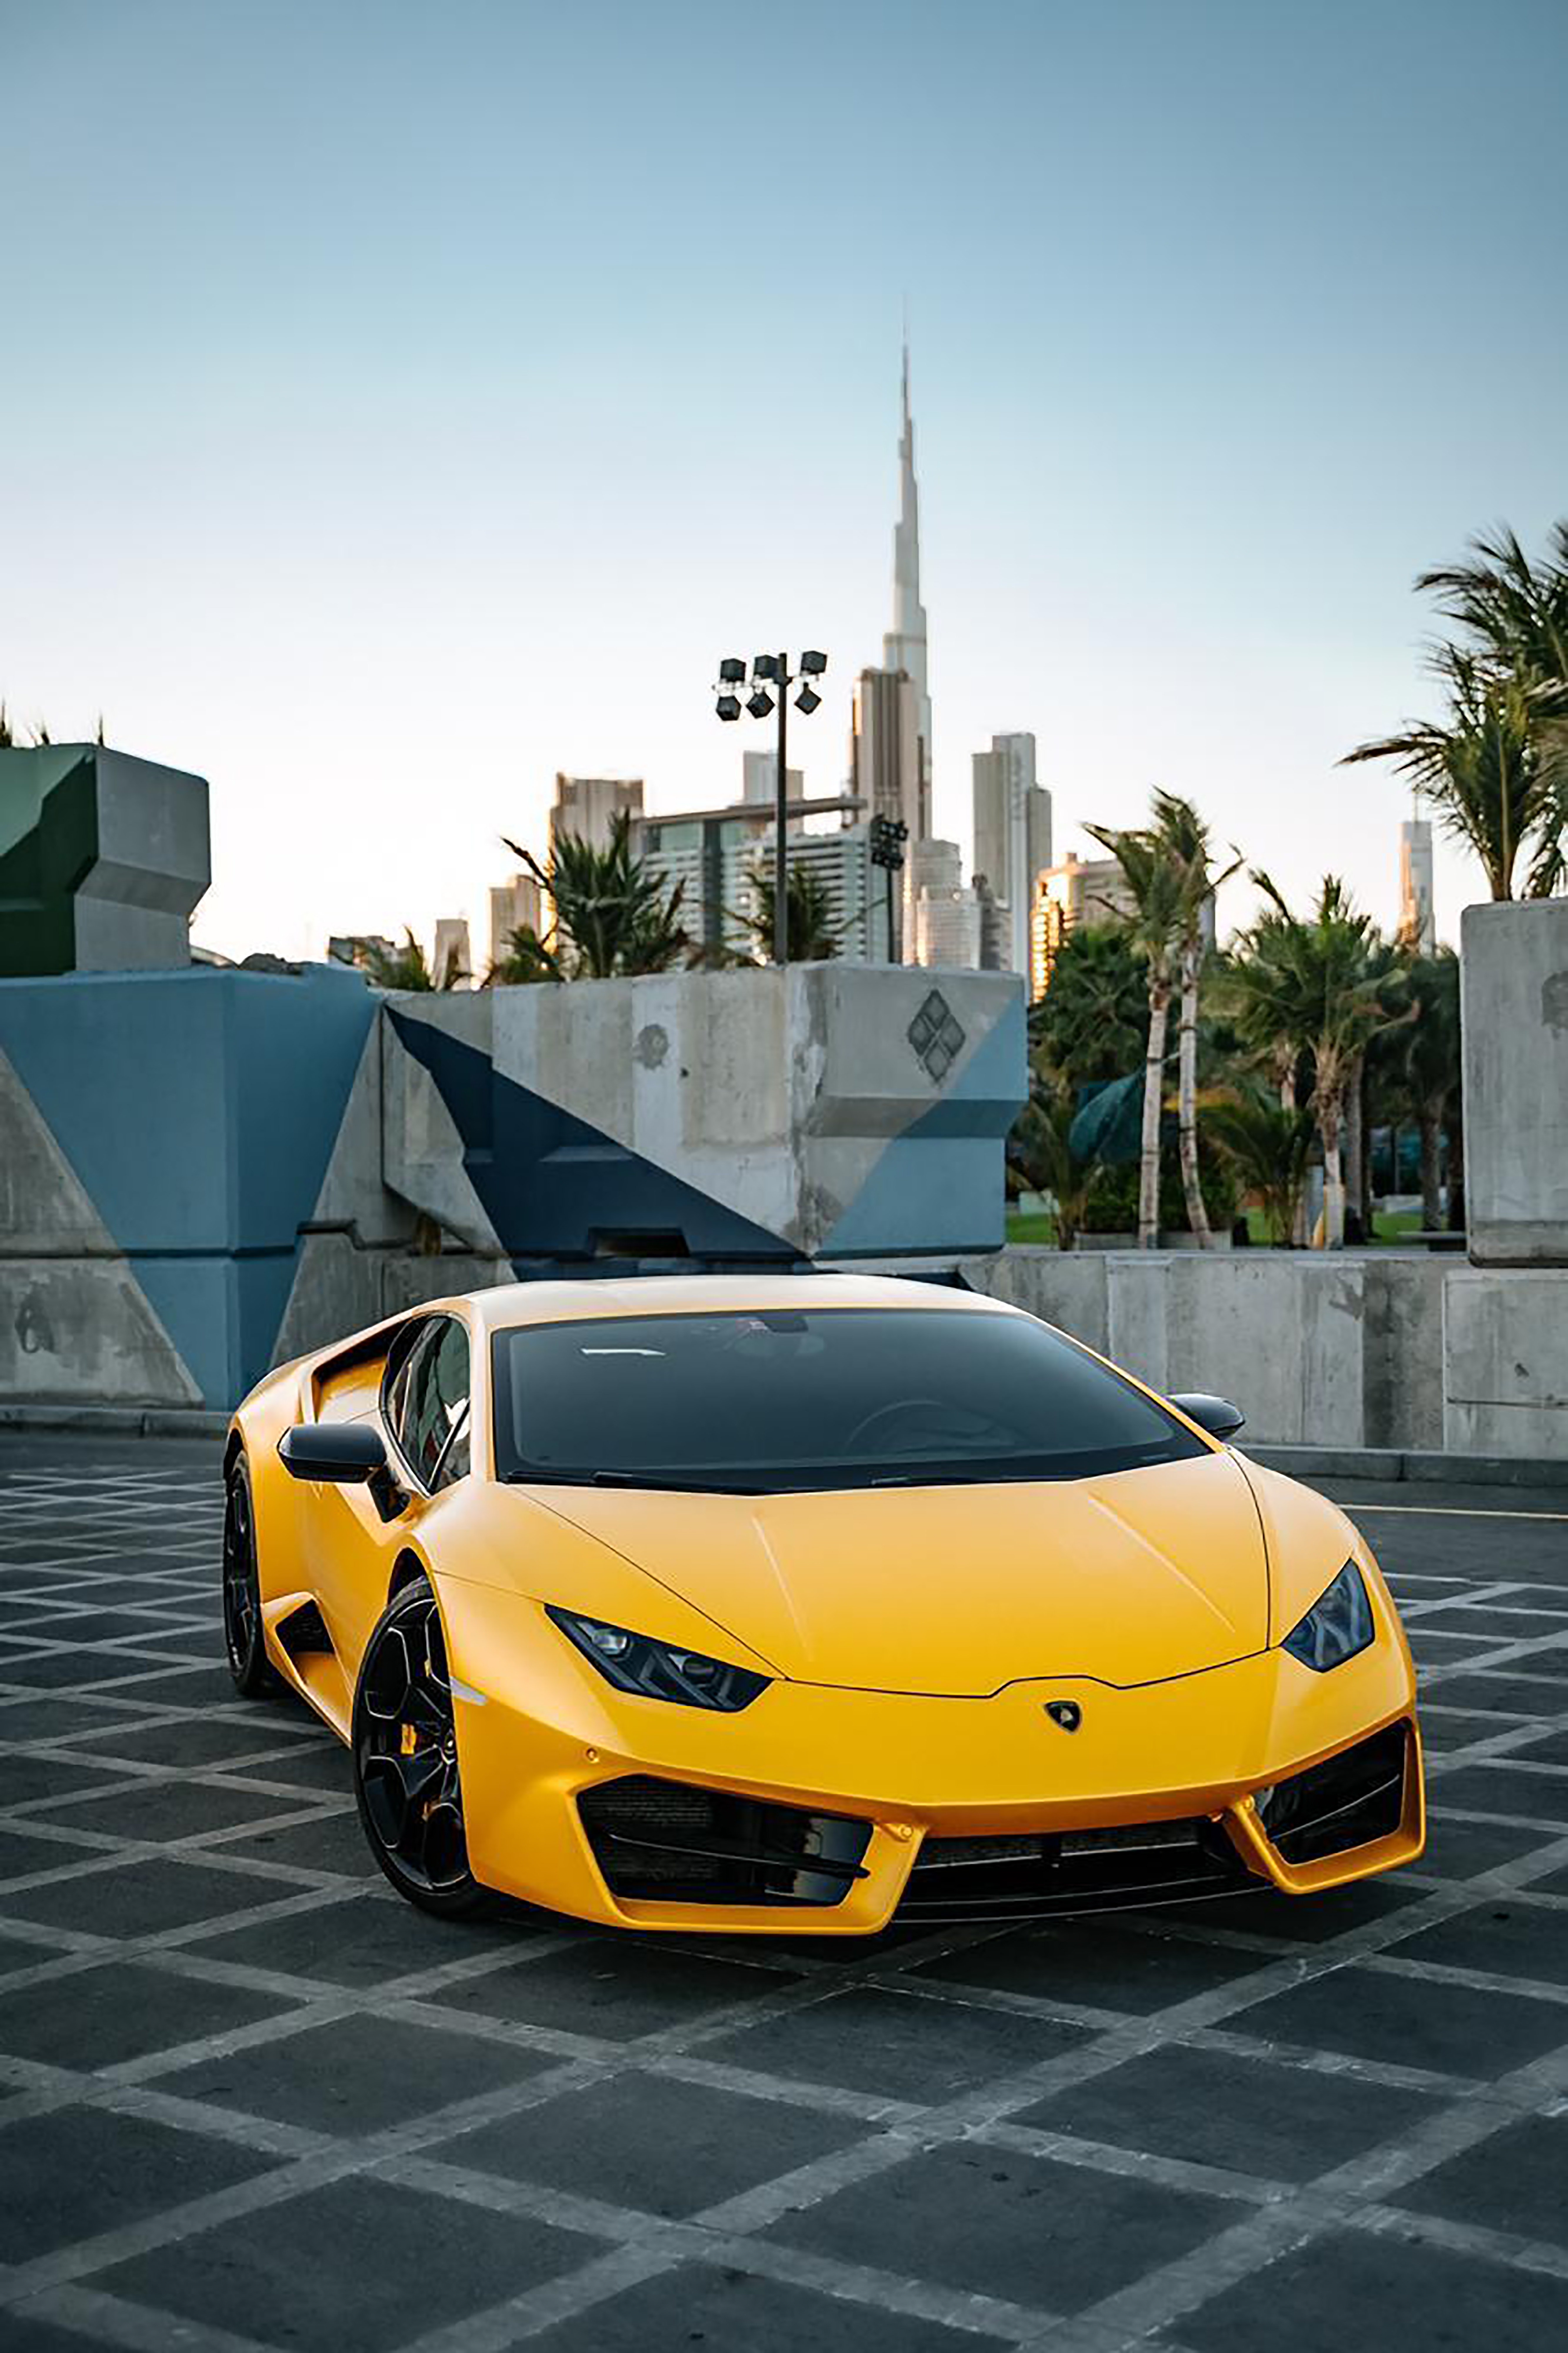 A yellow Lamborghini. | Photo: Pexels